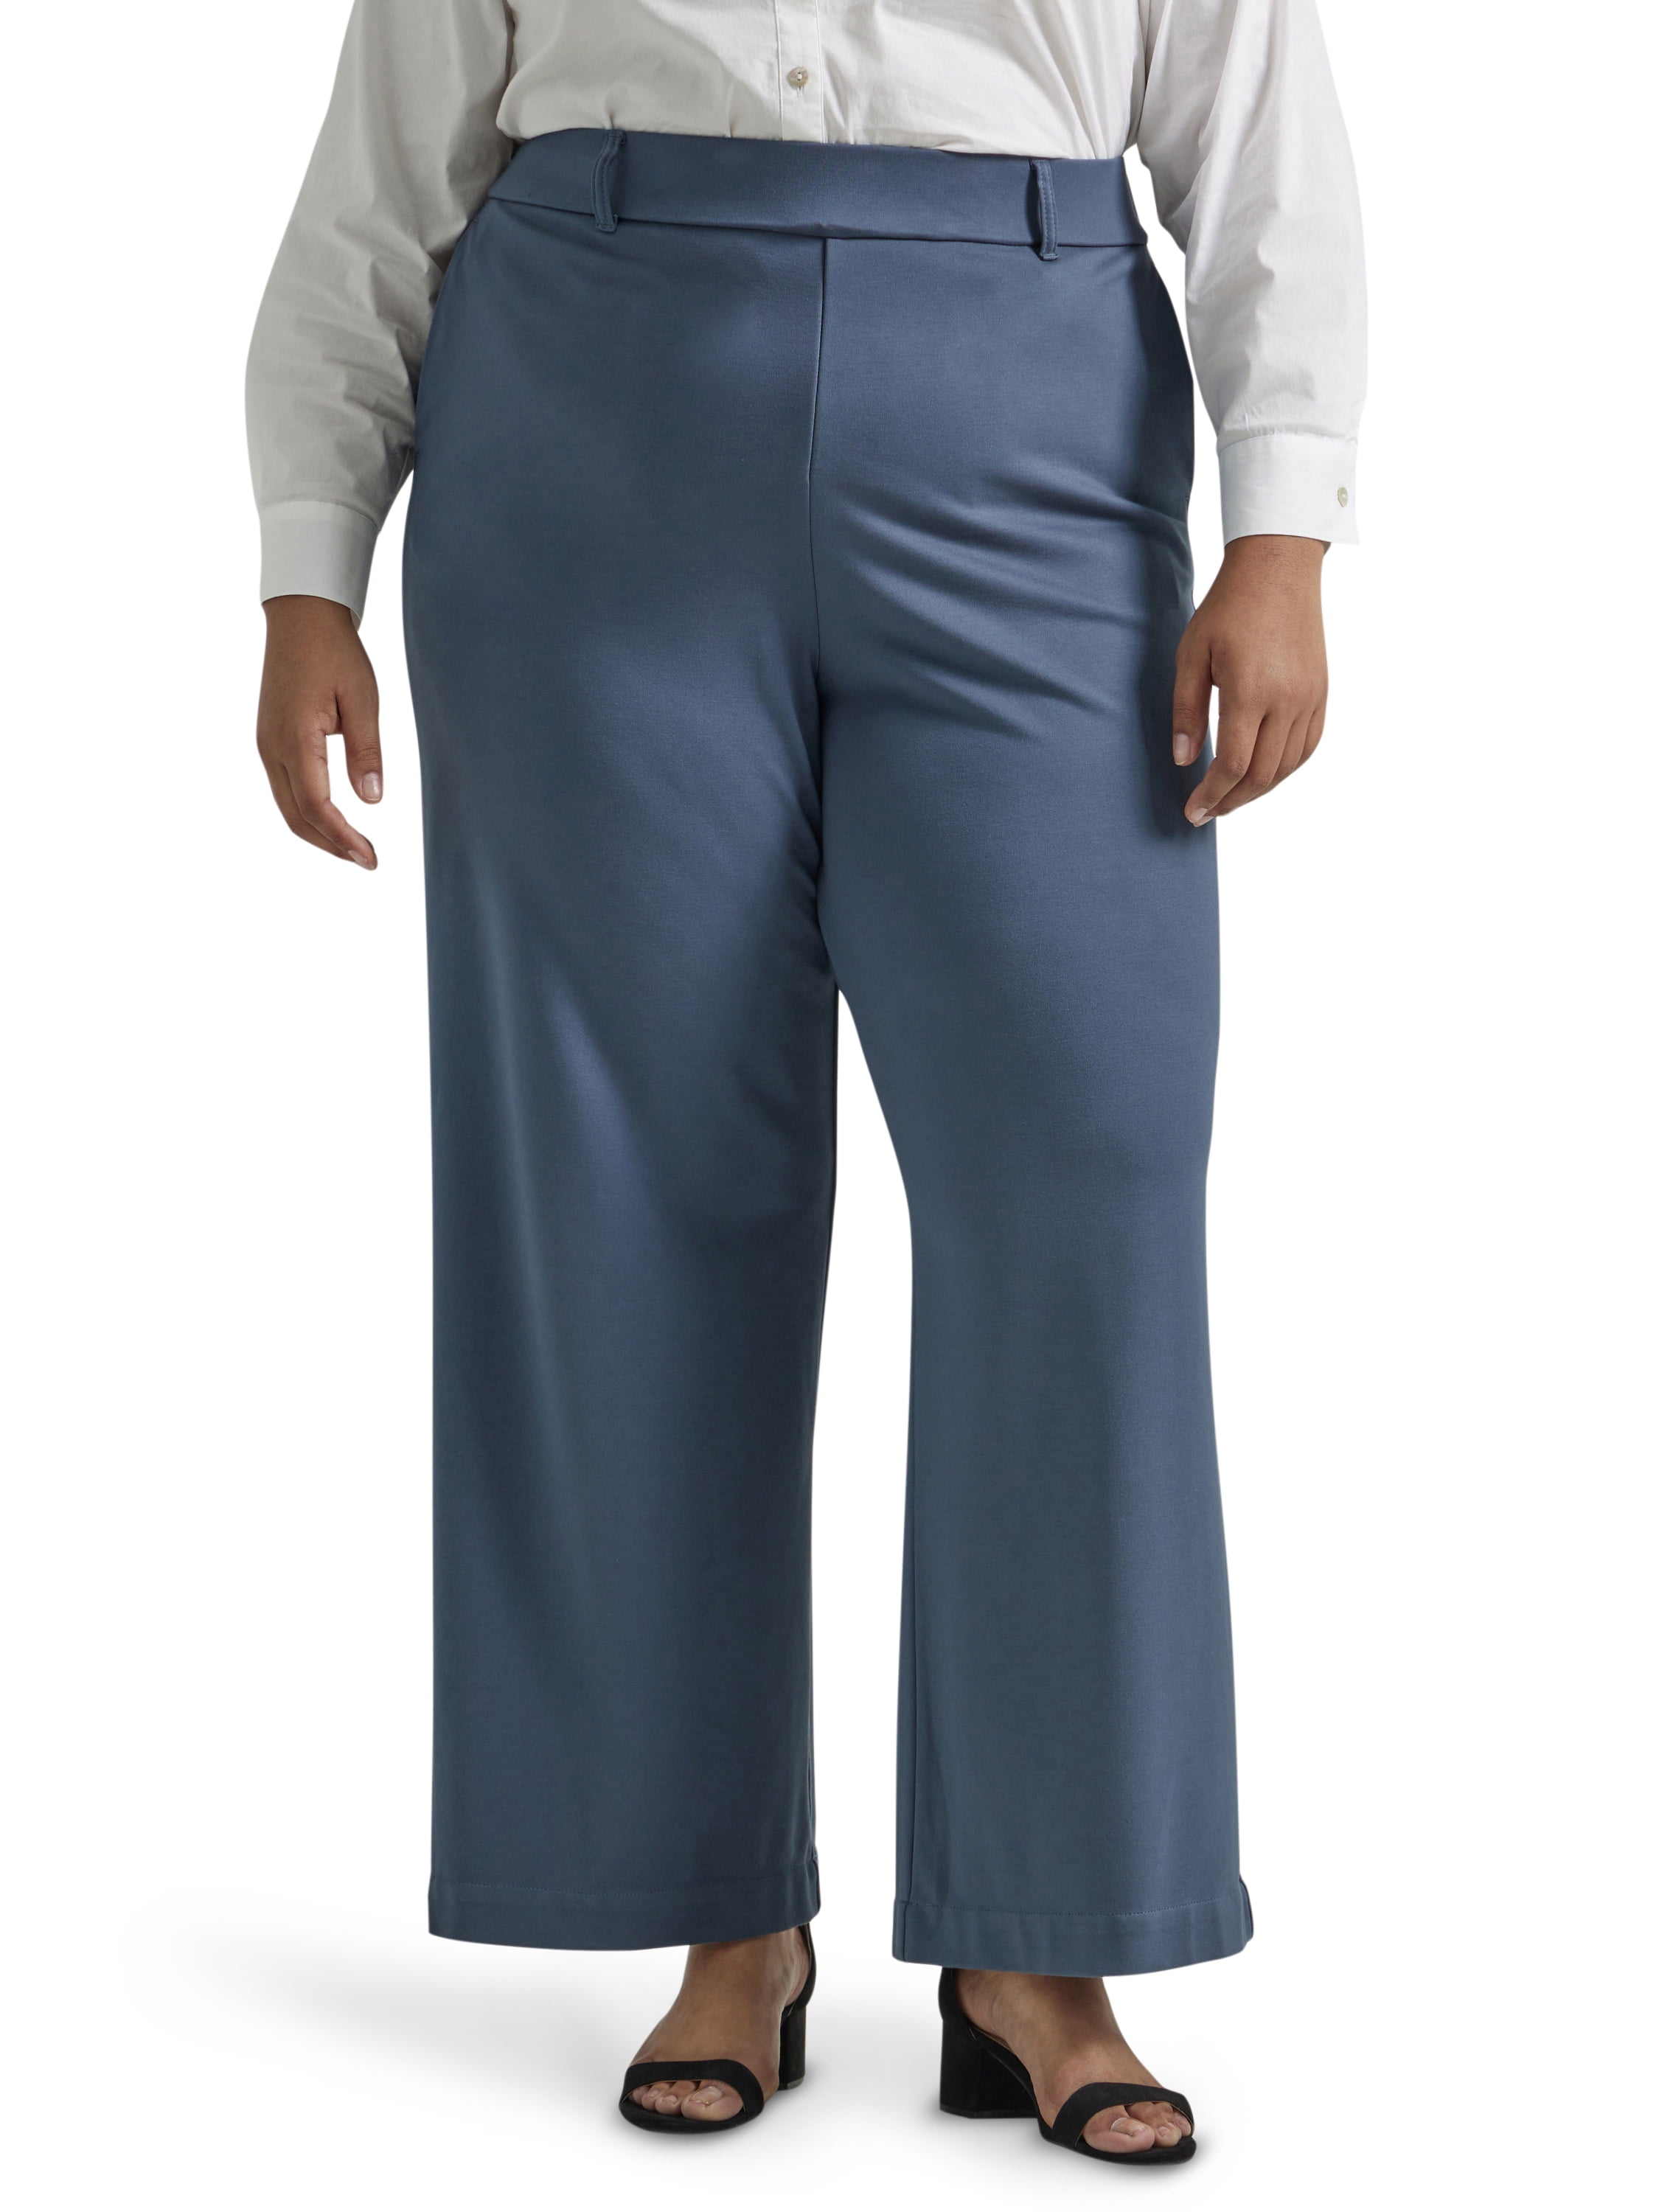 Lee® Women's Regular Fit Comfort Waist Straight Knit Pant 